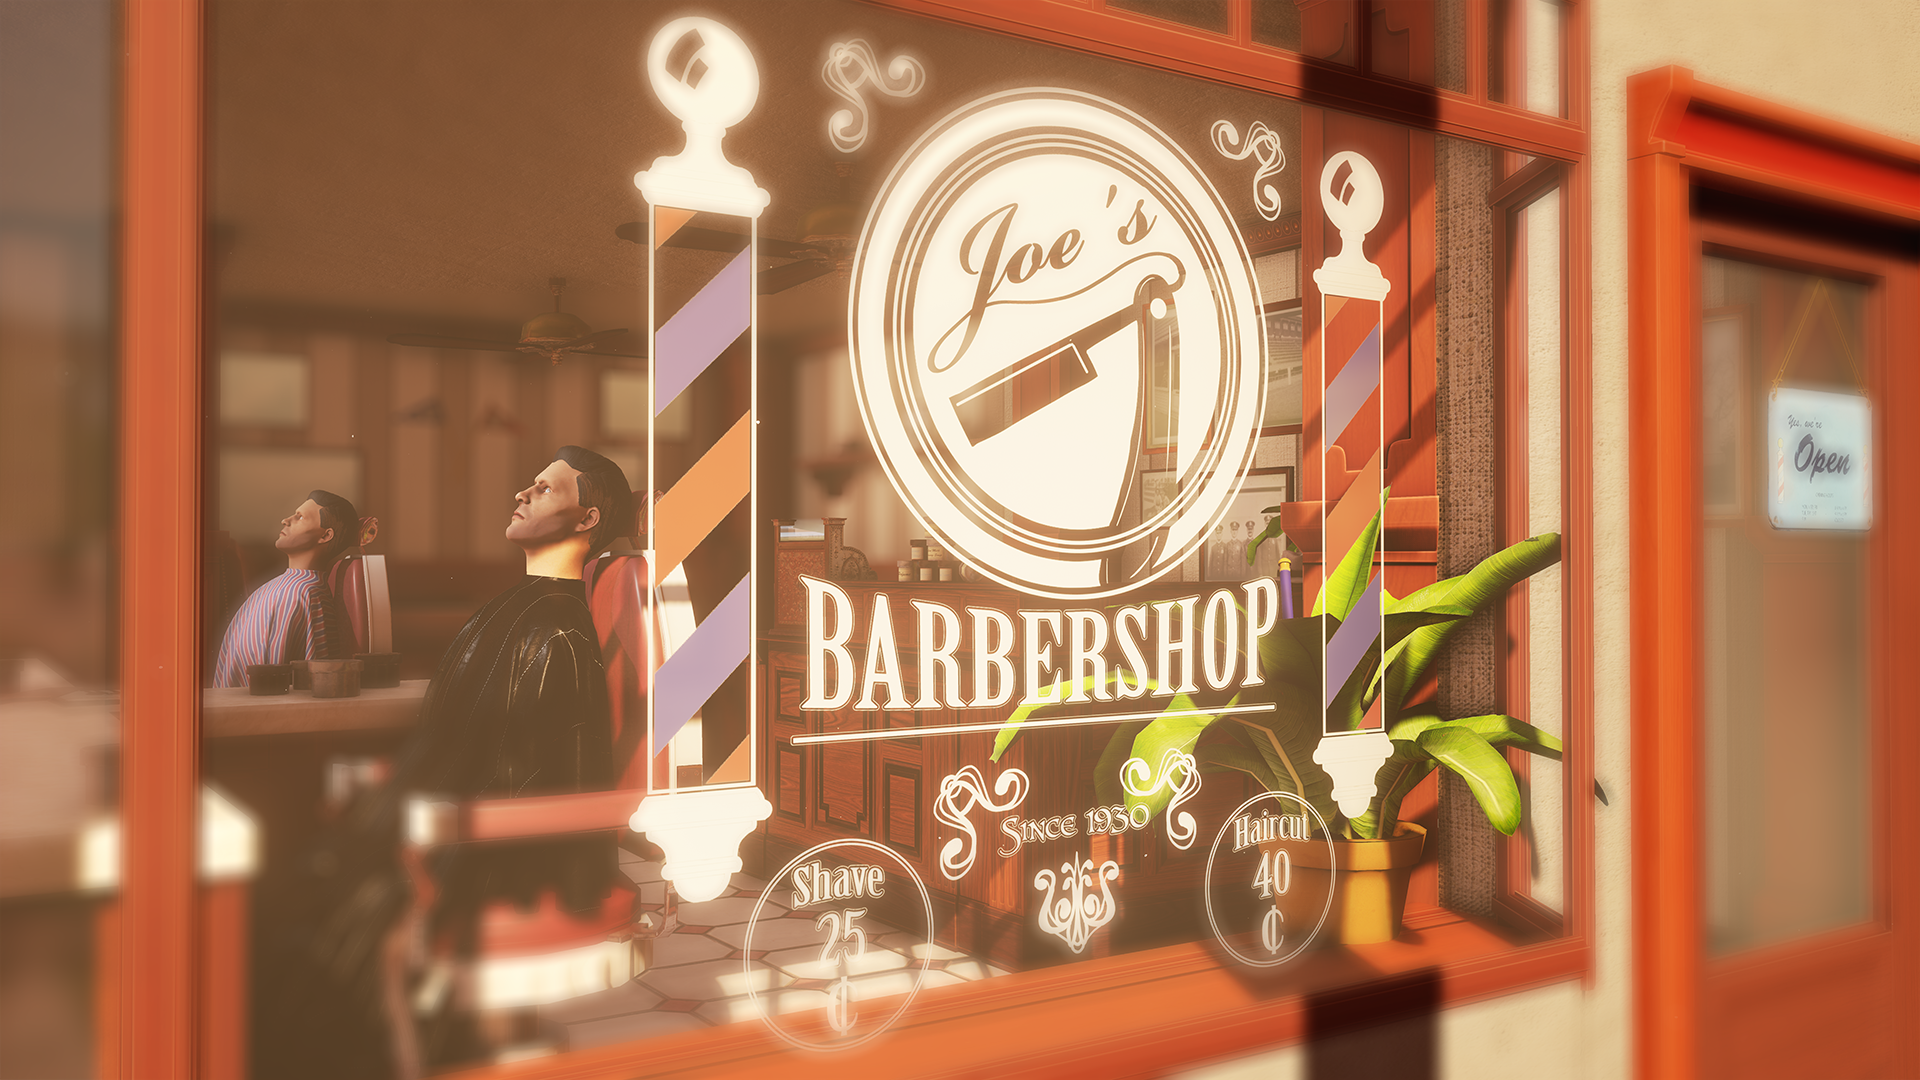 Barber Shop Hair Cut Simulator- Hair Cutting Games - APK Download